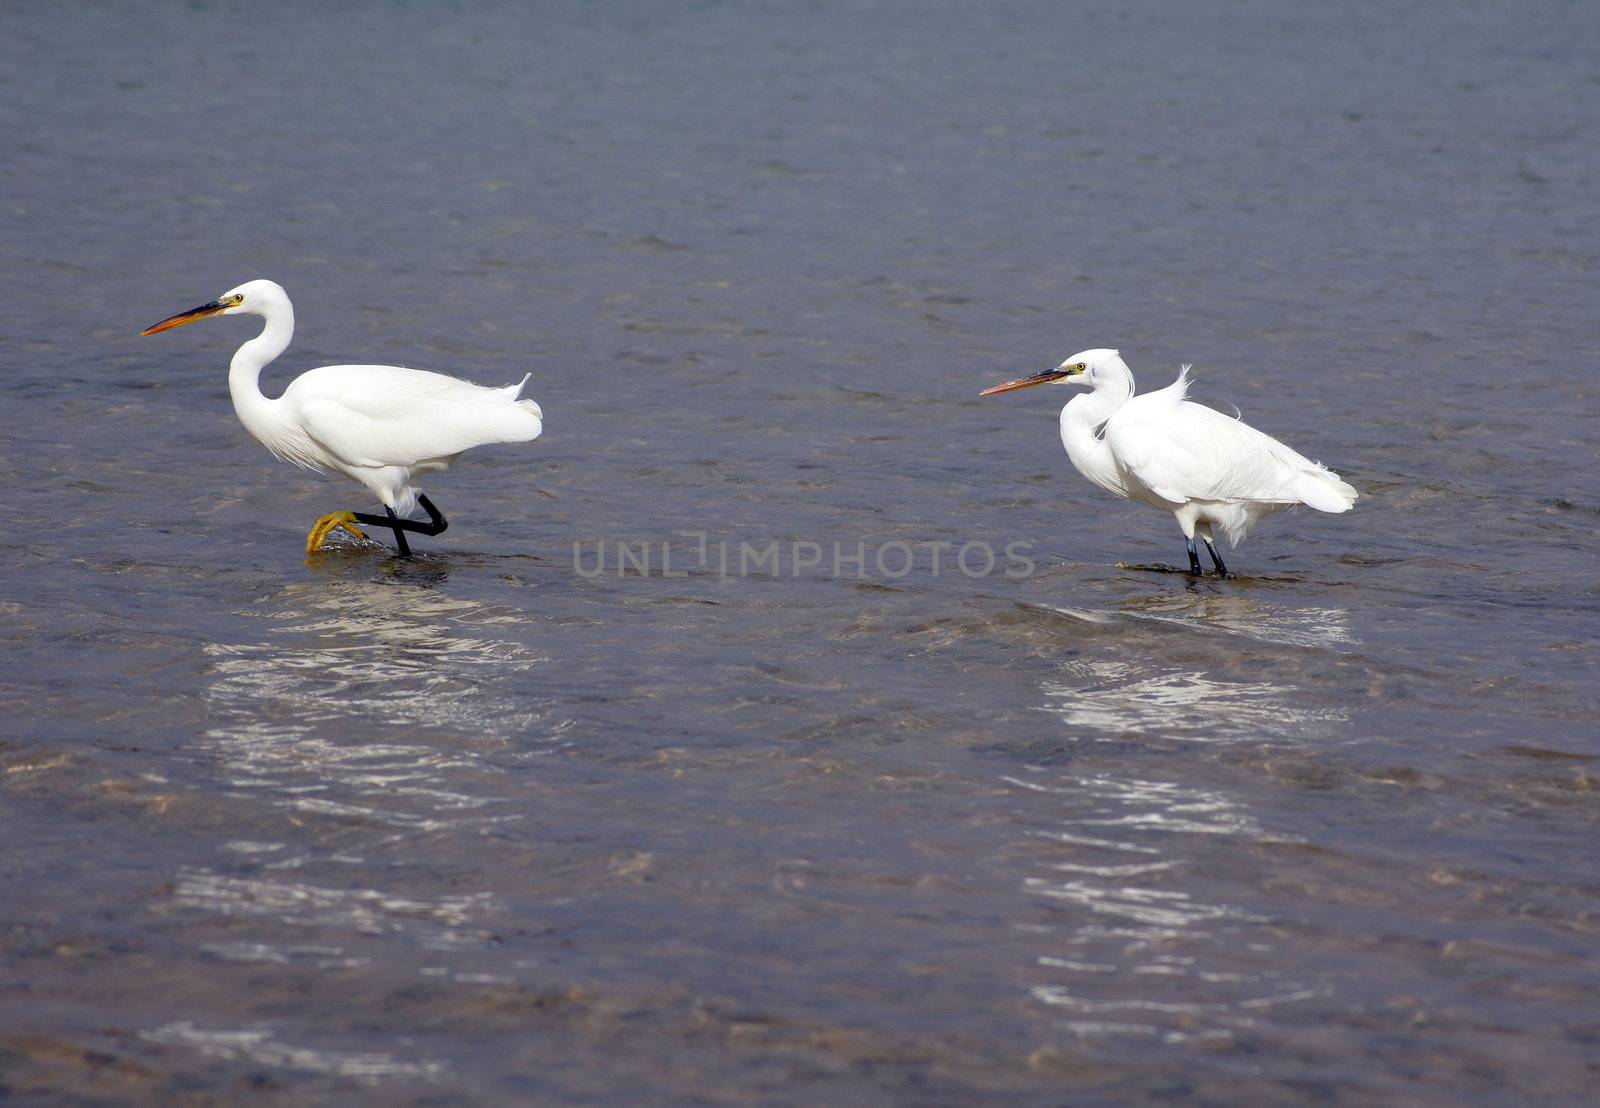 Couple of heron birds walking in the sea           